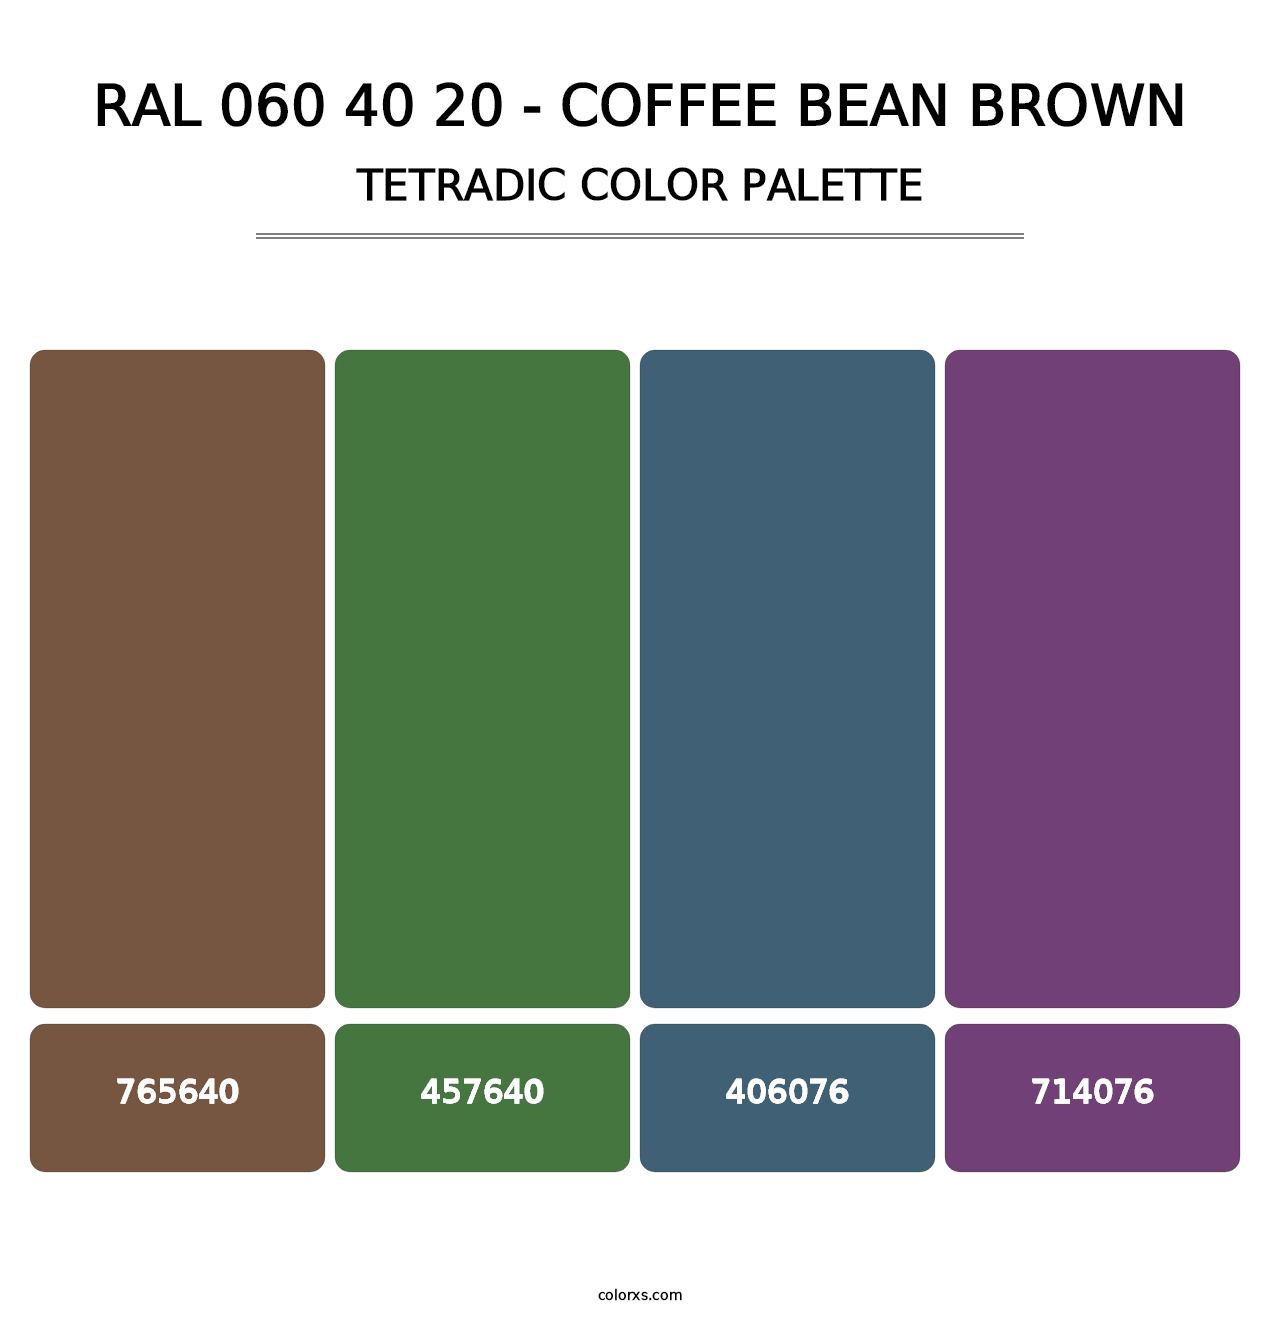 RAL 060 40 20 - Coffee Bean Brown - Tetradic Color Palette